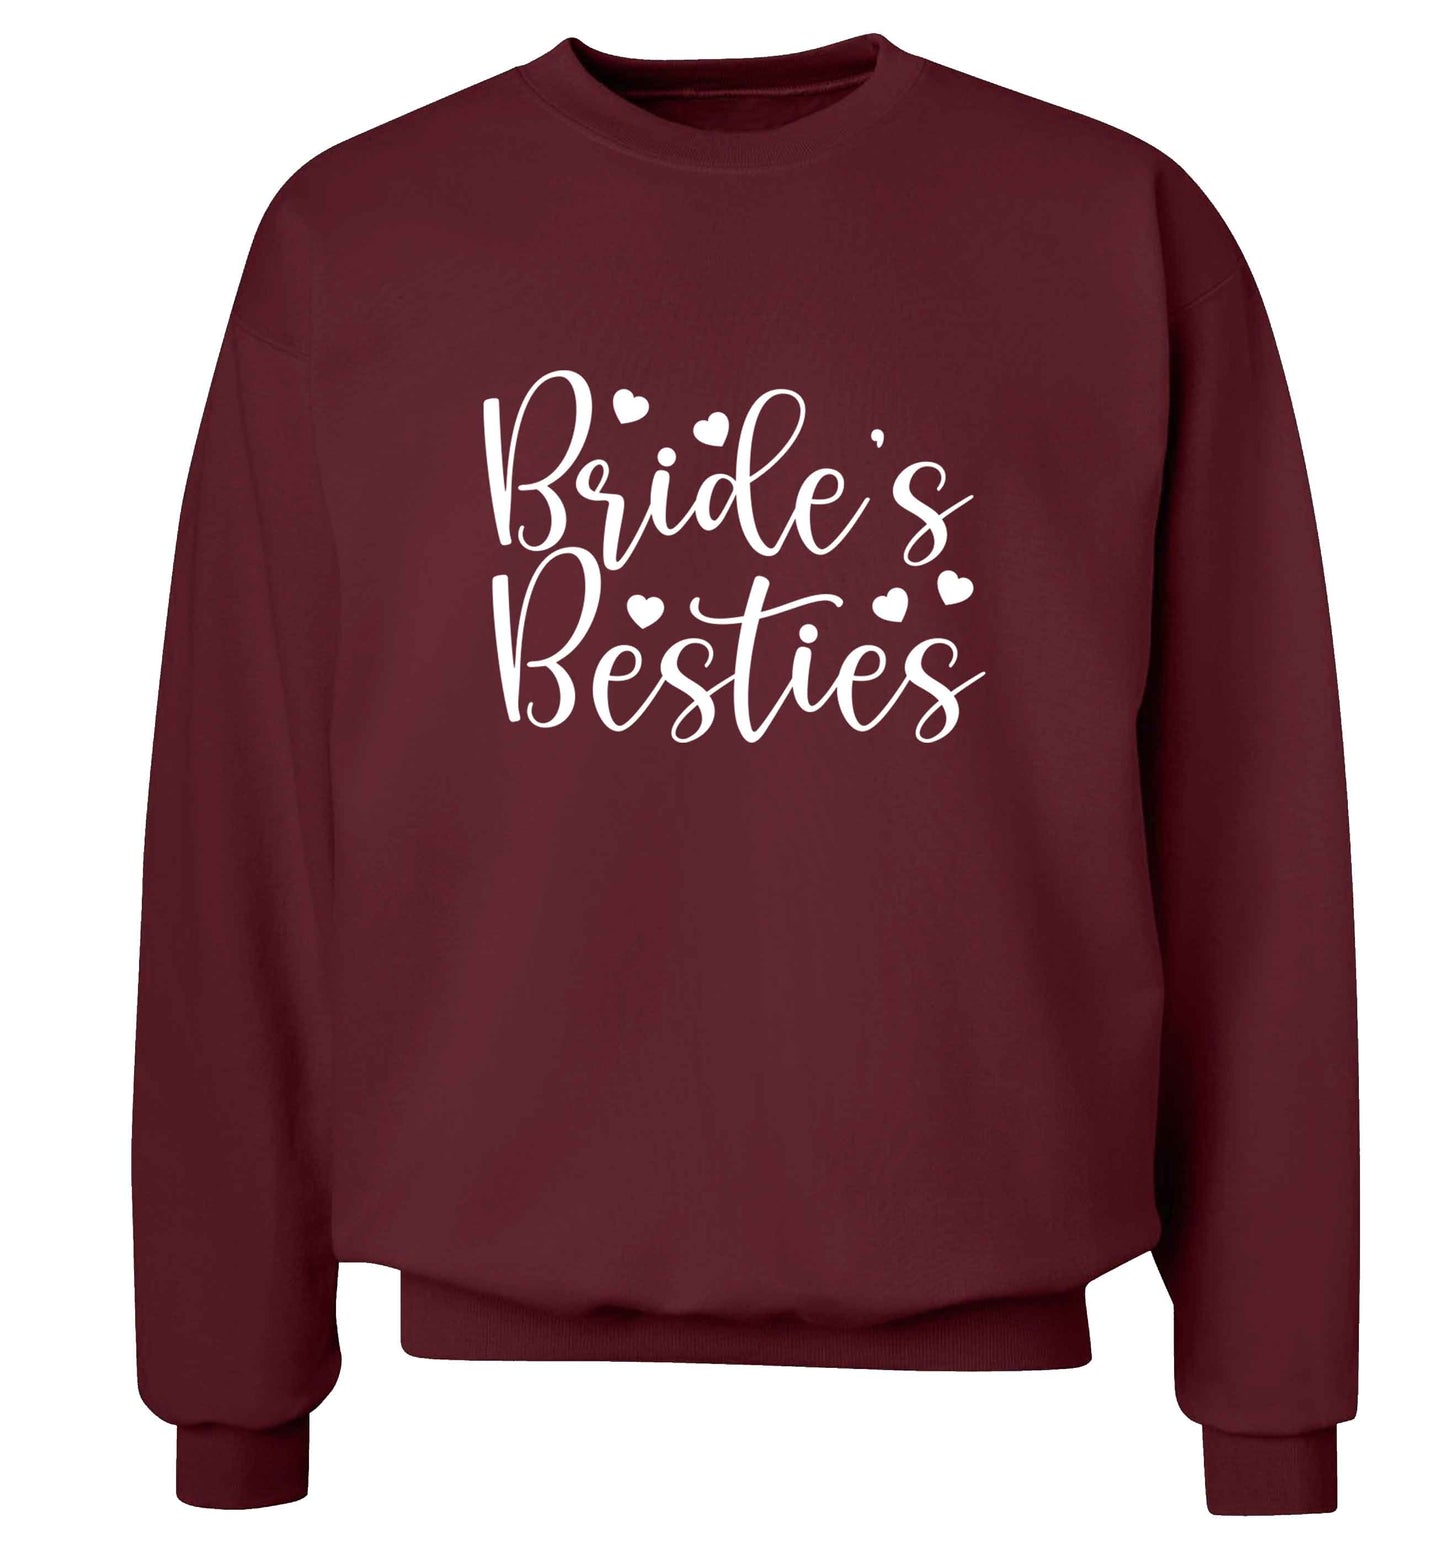 Brides besties adult's unisex maroon sweater 2XL